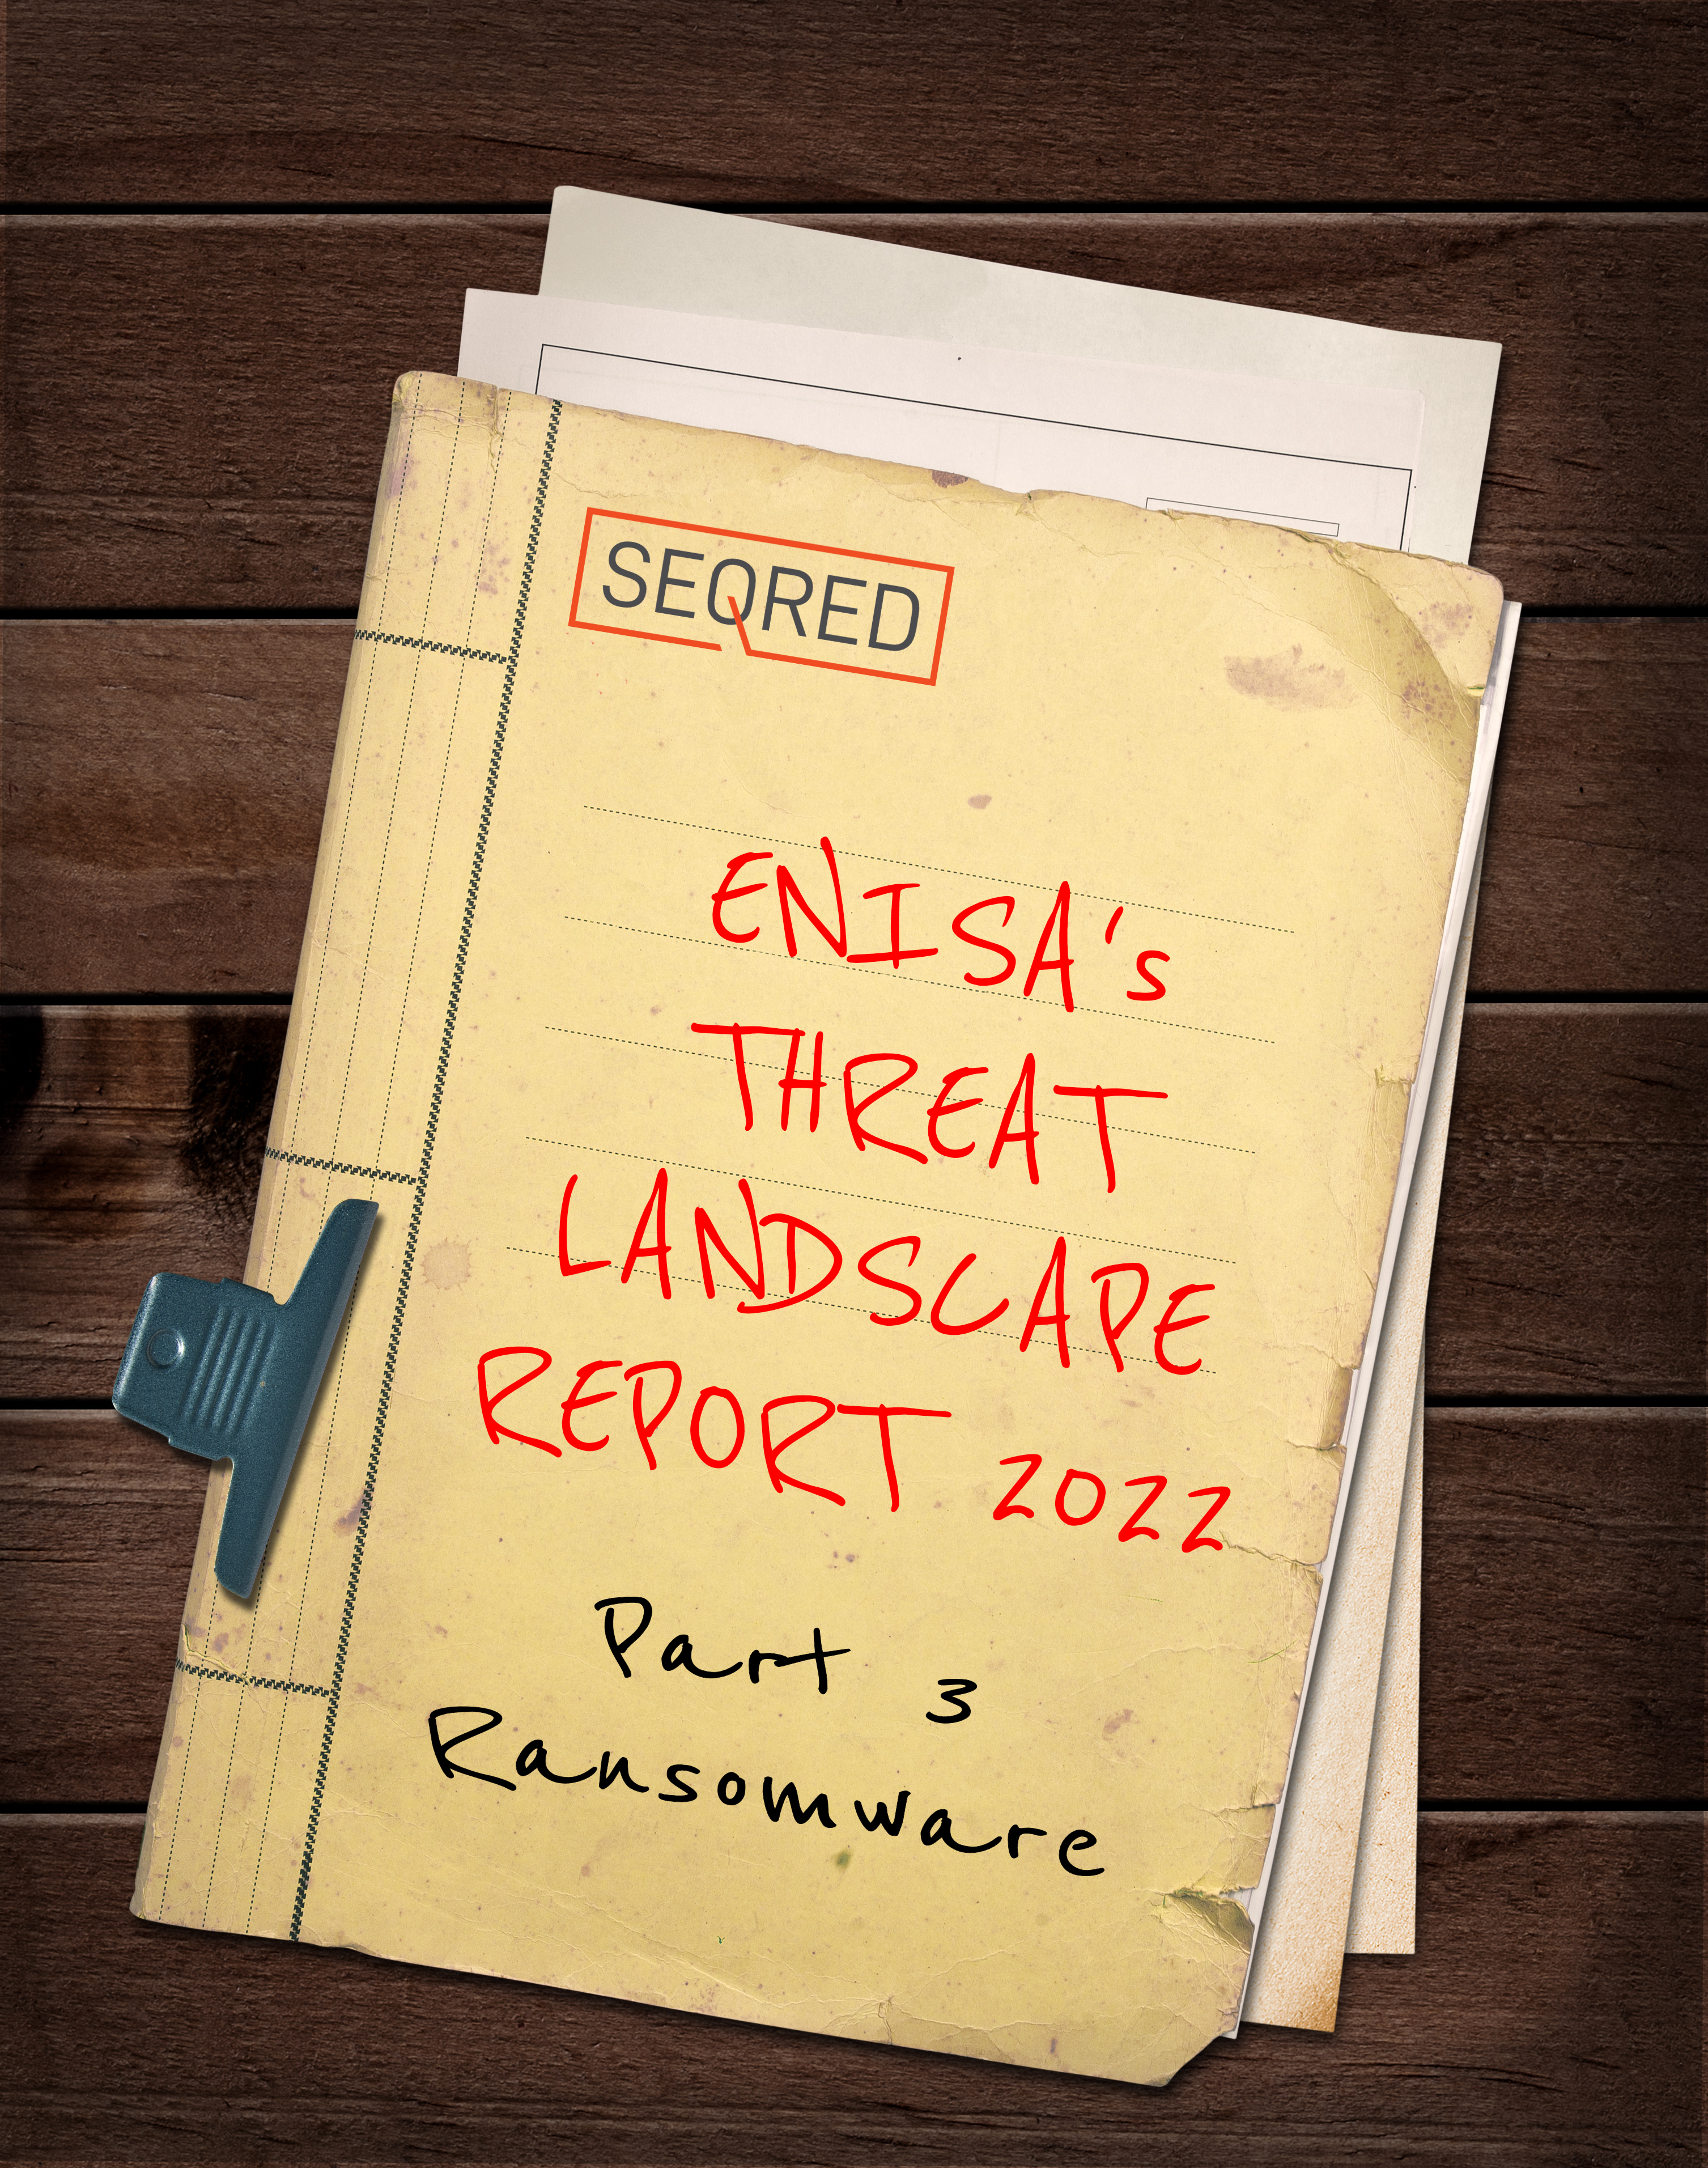 ENISA’s Threat Landscape Report 2022 – Part 3 - Ransomware